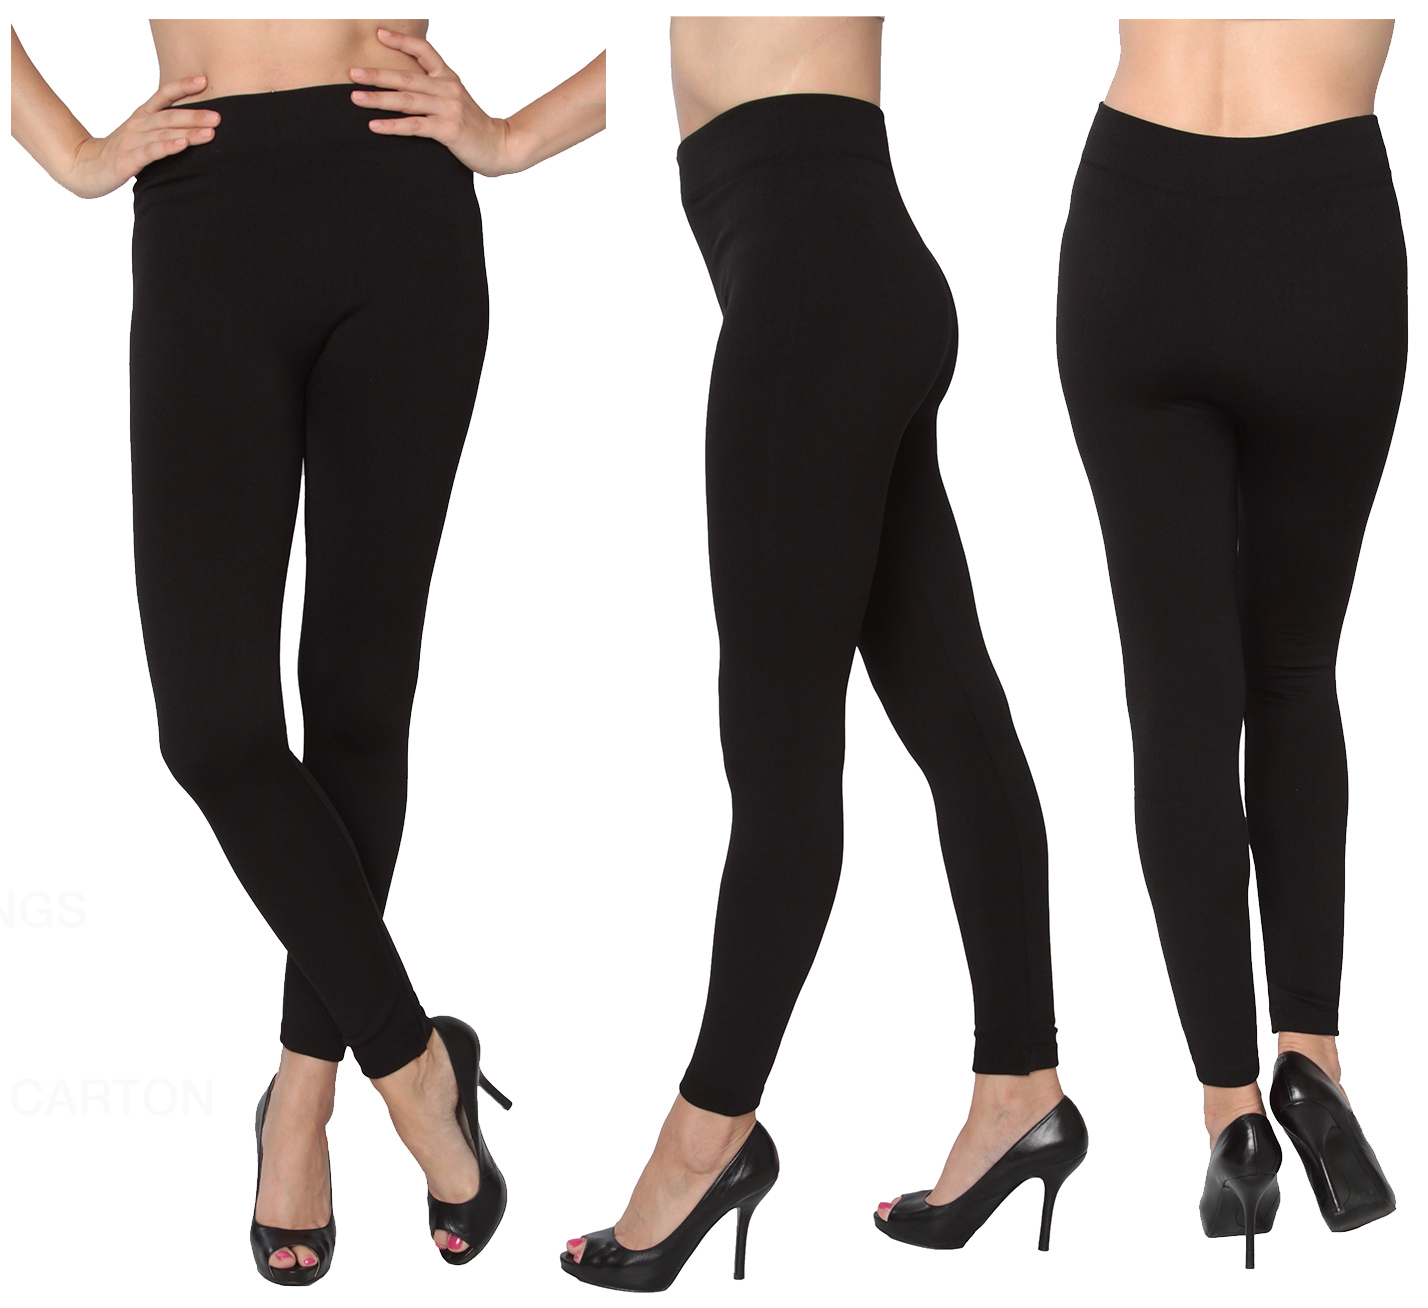 Wholesale Women's Plus Size Leggings in Black, XL - DollarDays